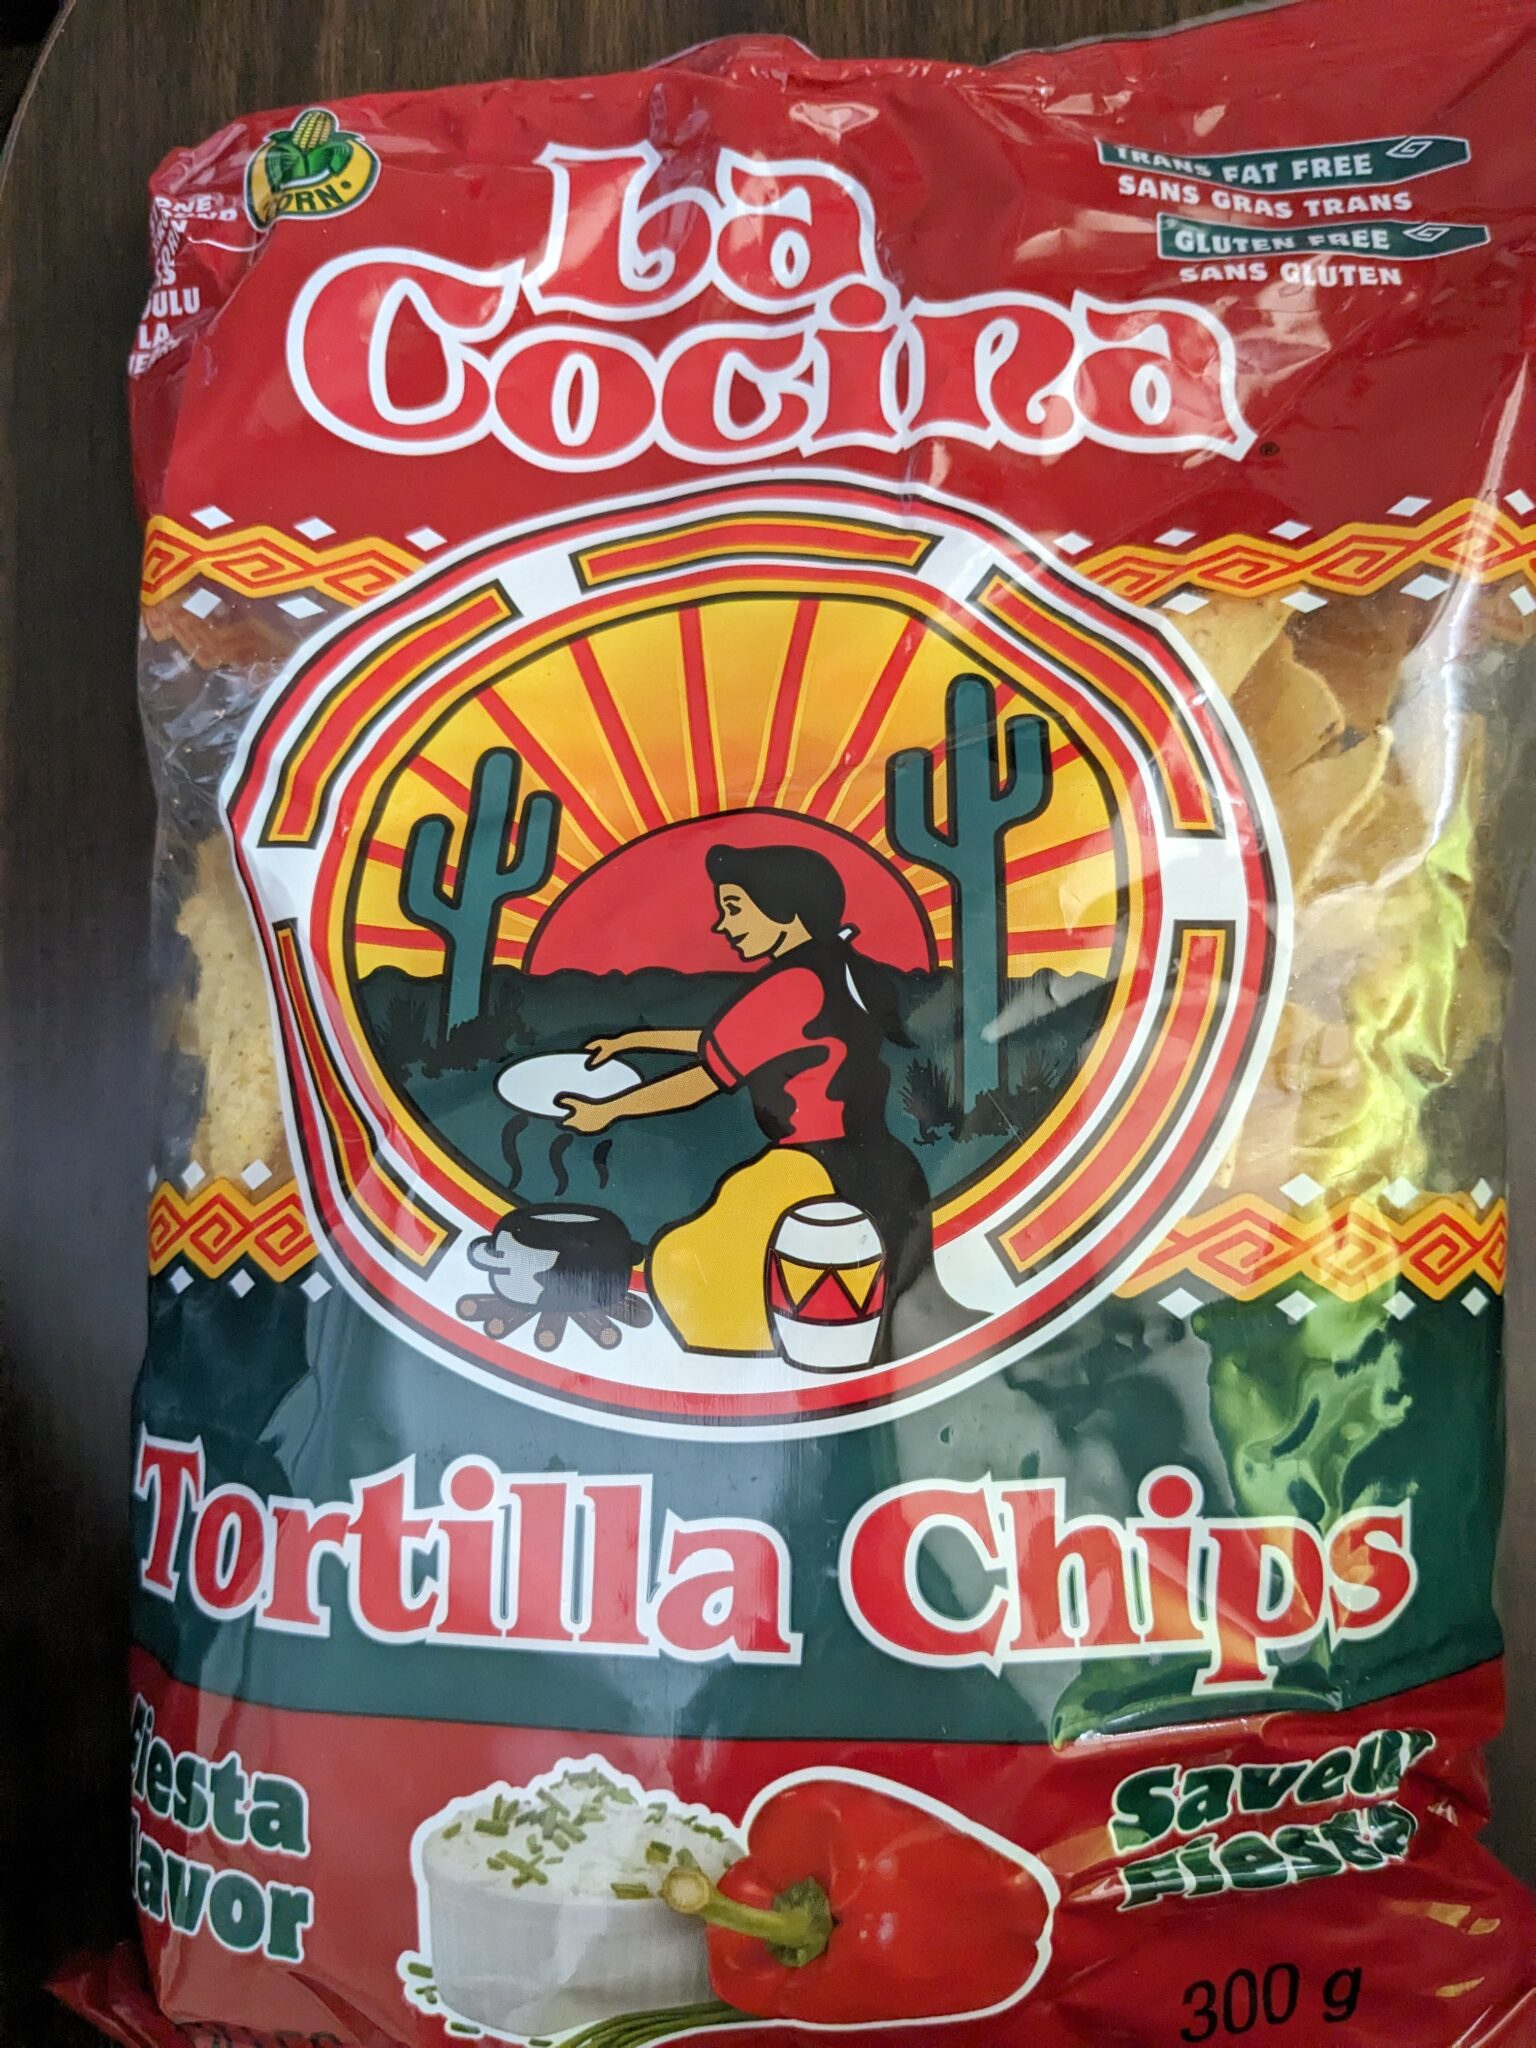 La Cocina Foods – Siesta Tortilla Chips